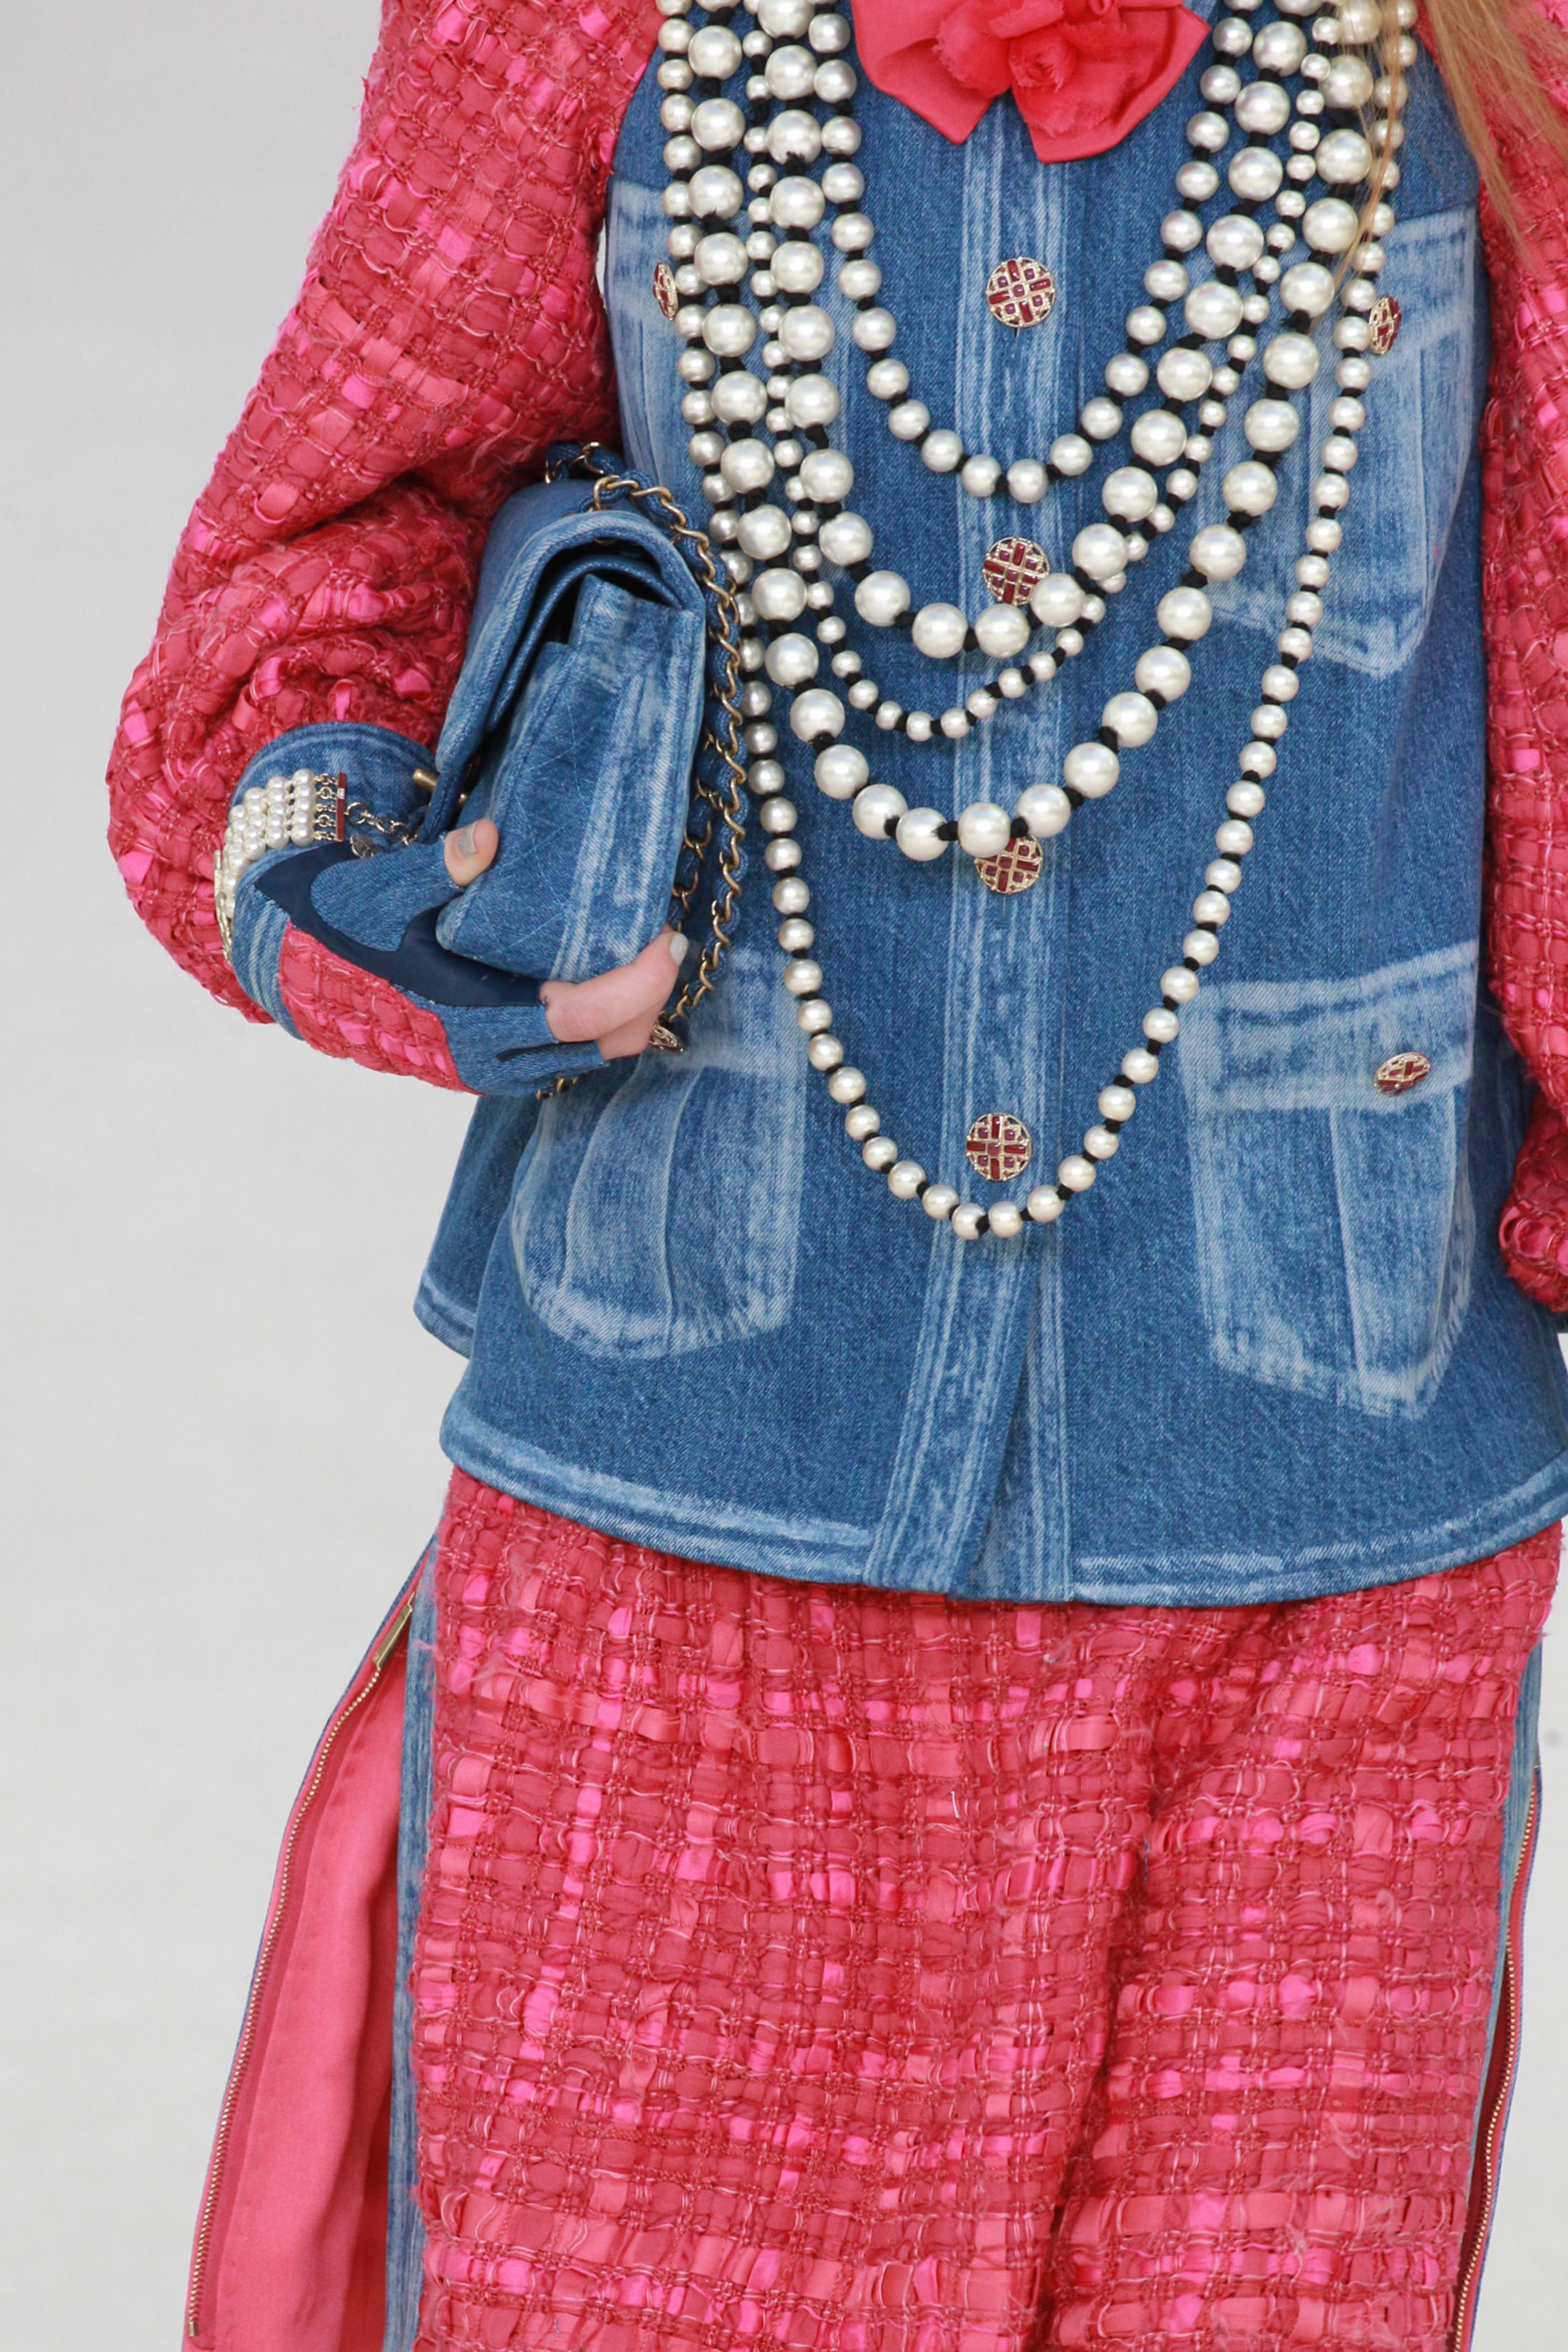 HaileyBieber rocks a @chanelofficial vintage jacket. #upscalehype